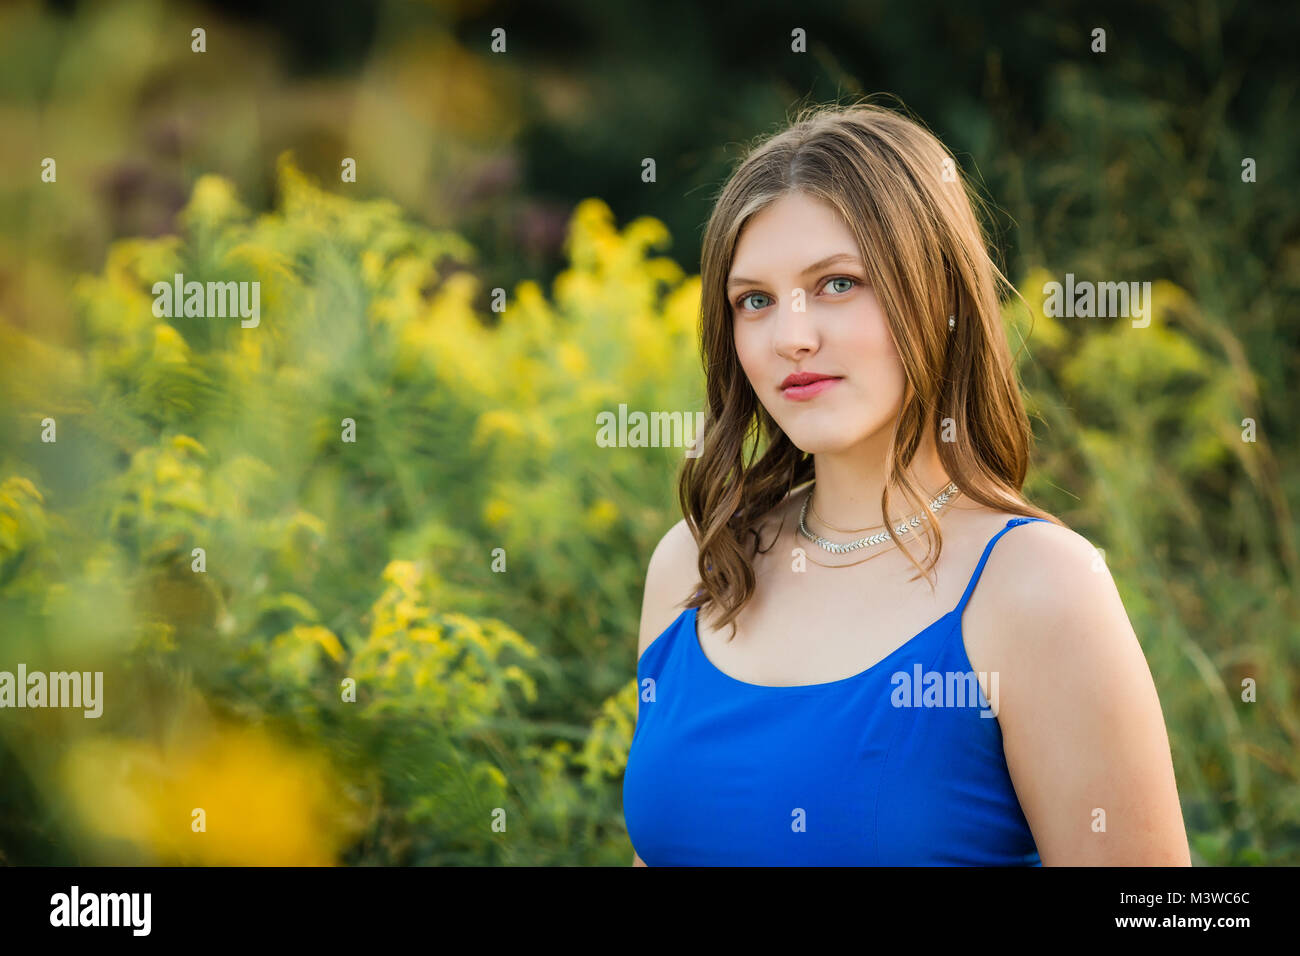 High school senior girl portraits outside during summertime. One person. Beautiful brunette teenage female. Stock Photo